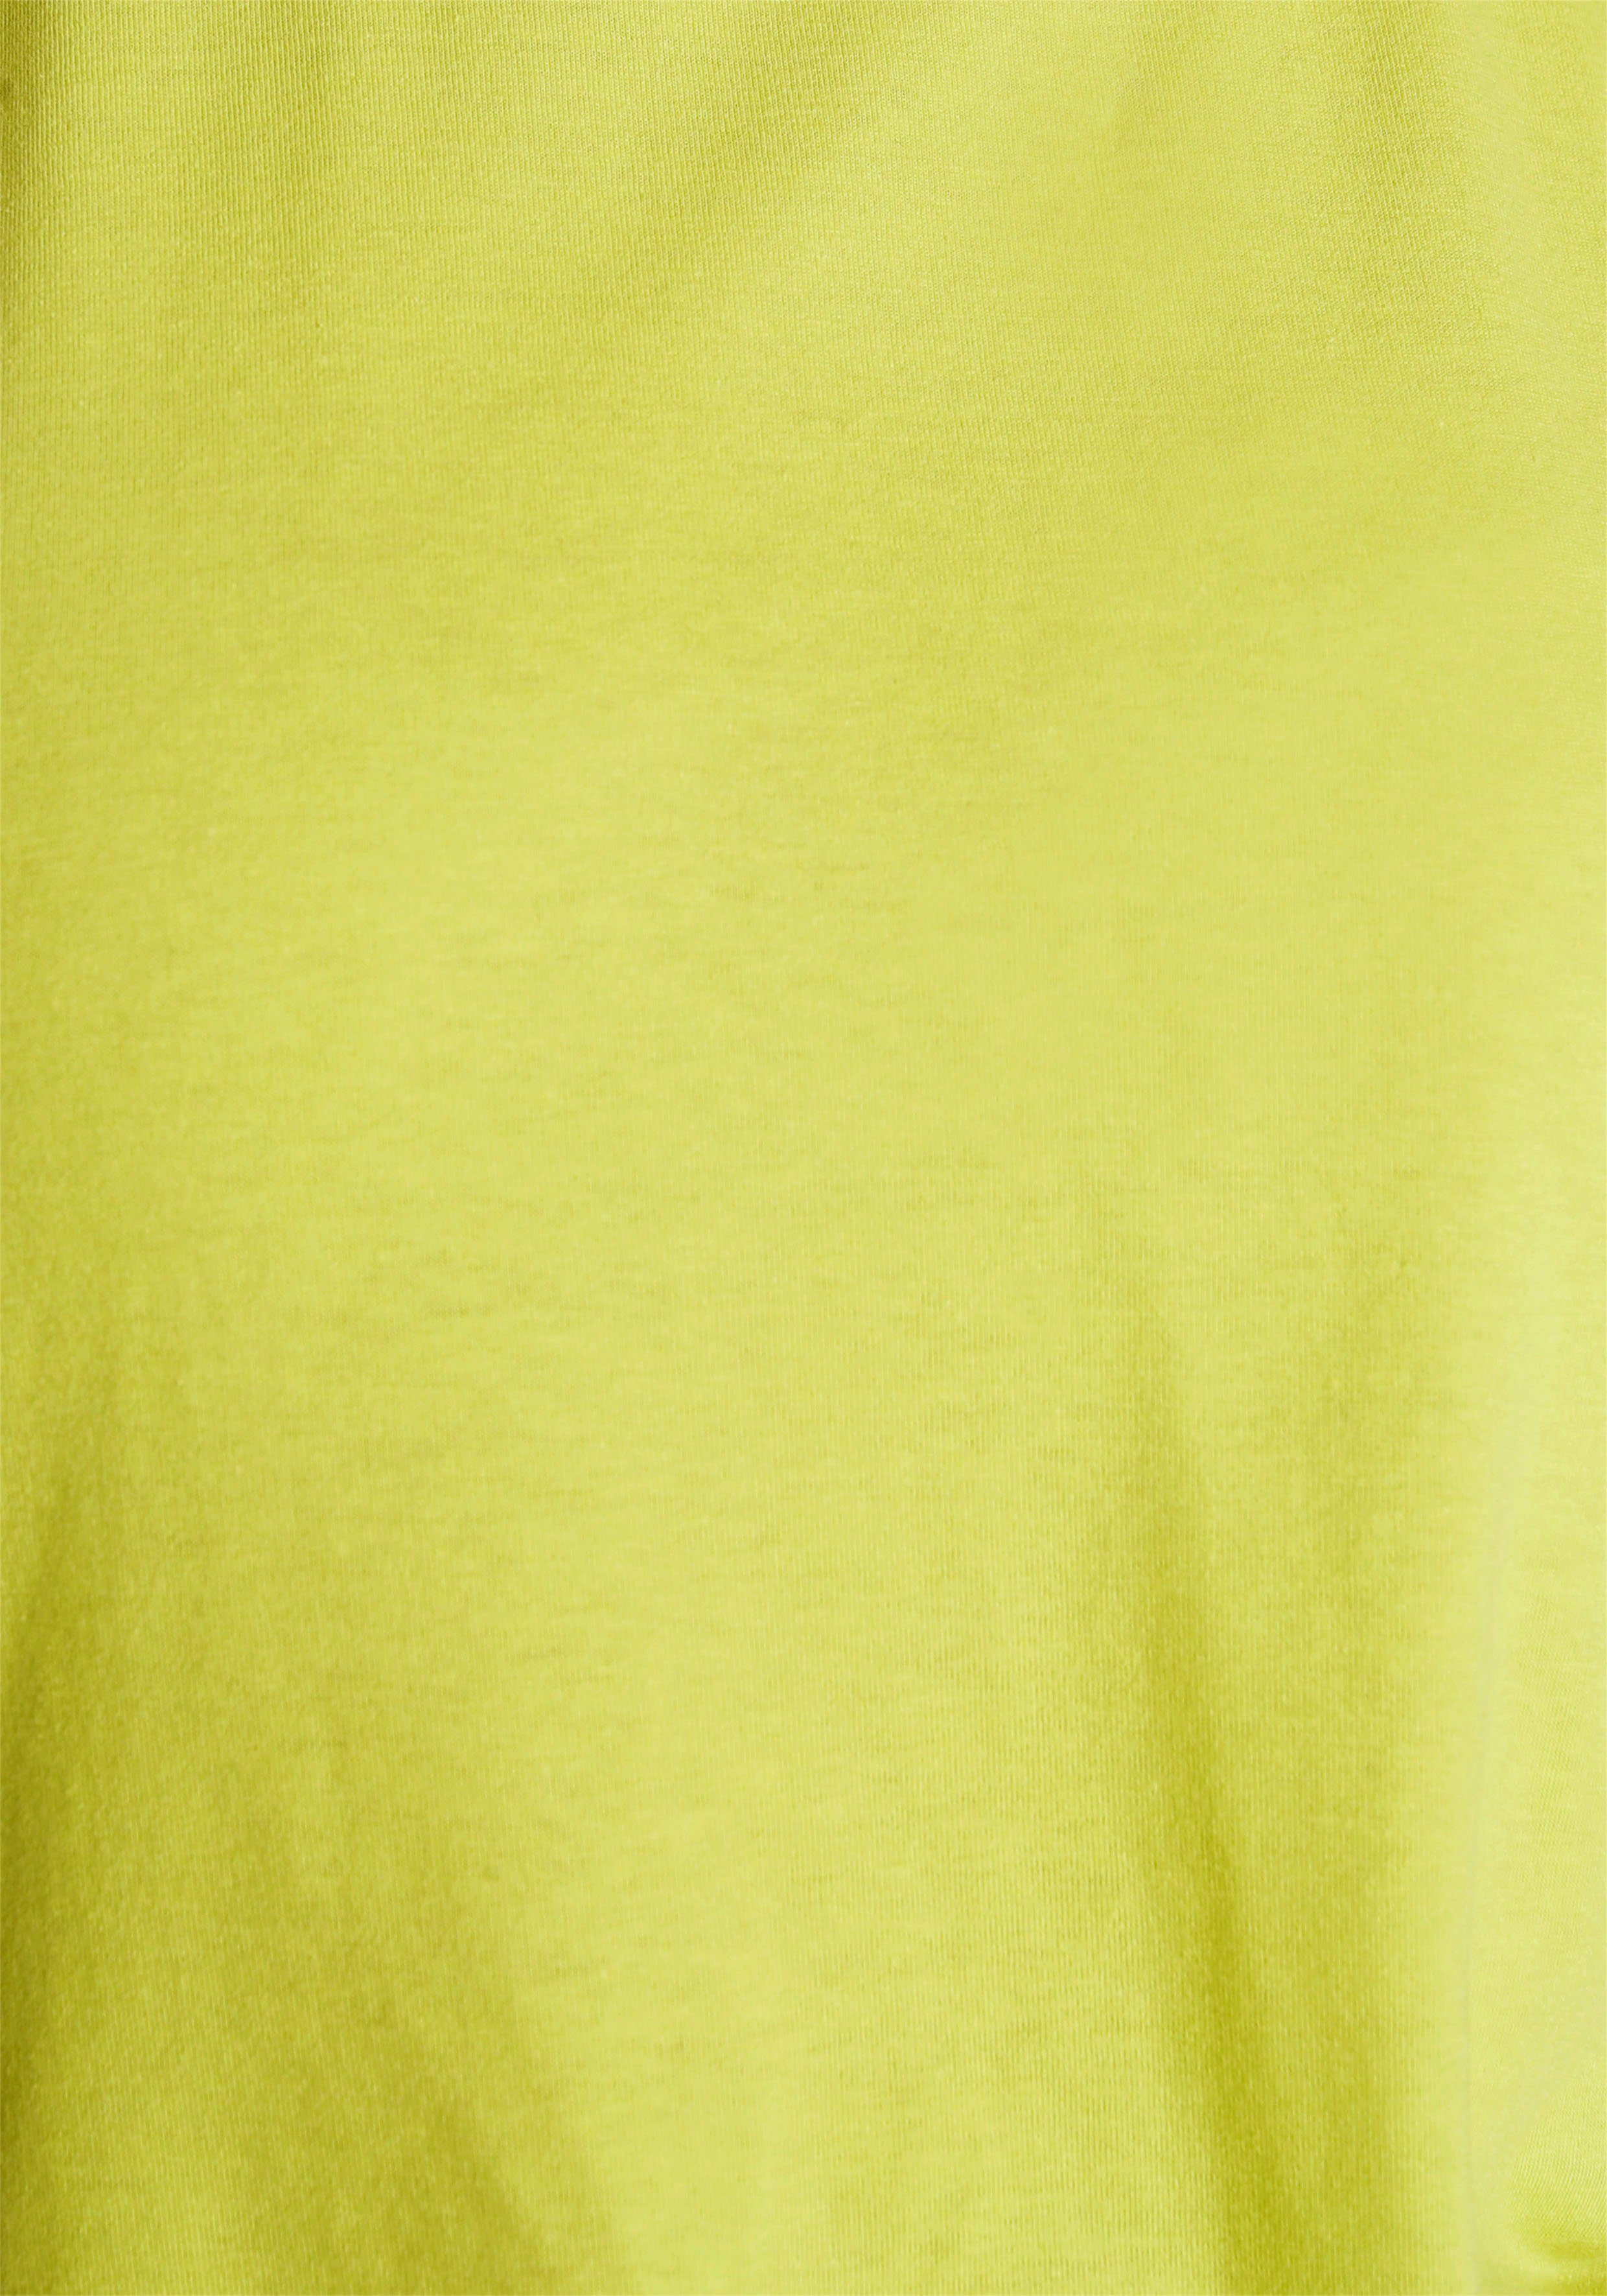 Boysen's T-Shirt neue lange Form limone